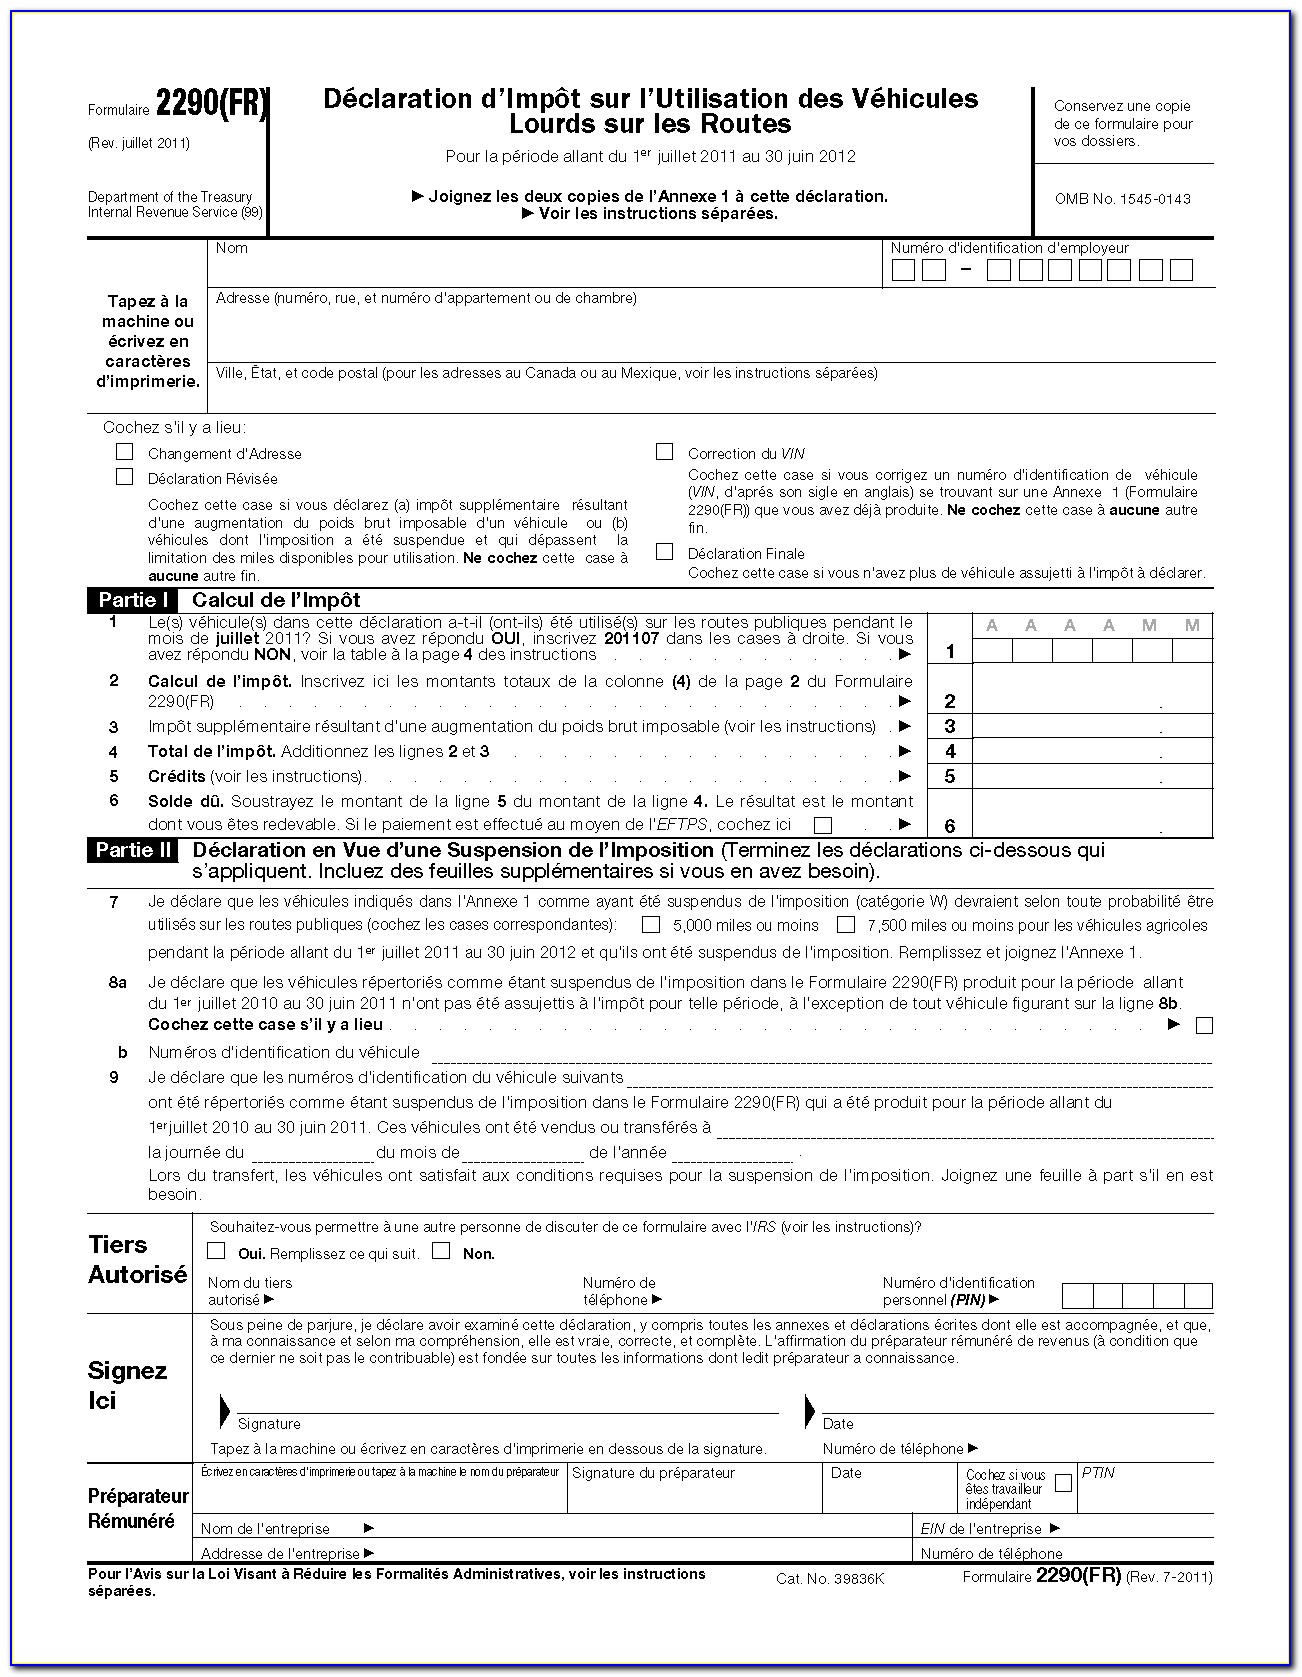 Internal Revenue Service Form 2290 Instructions